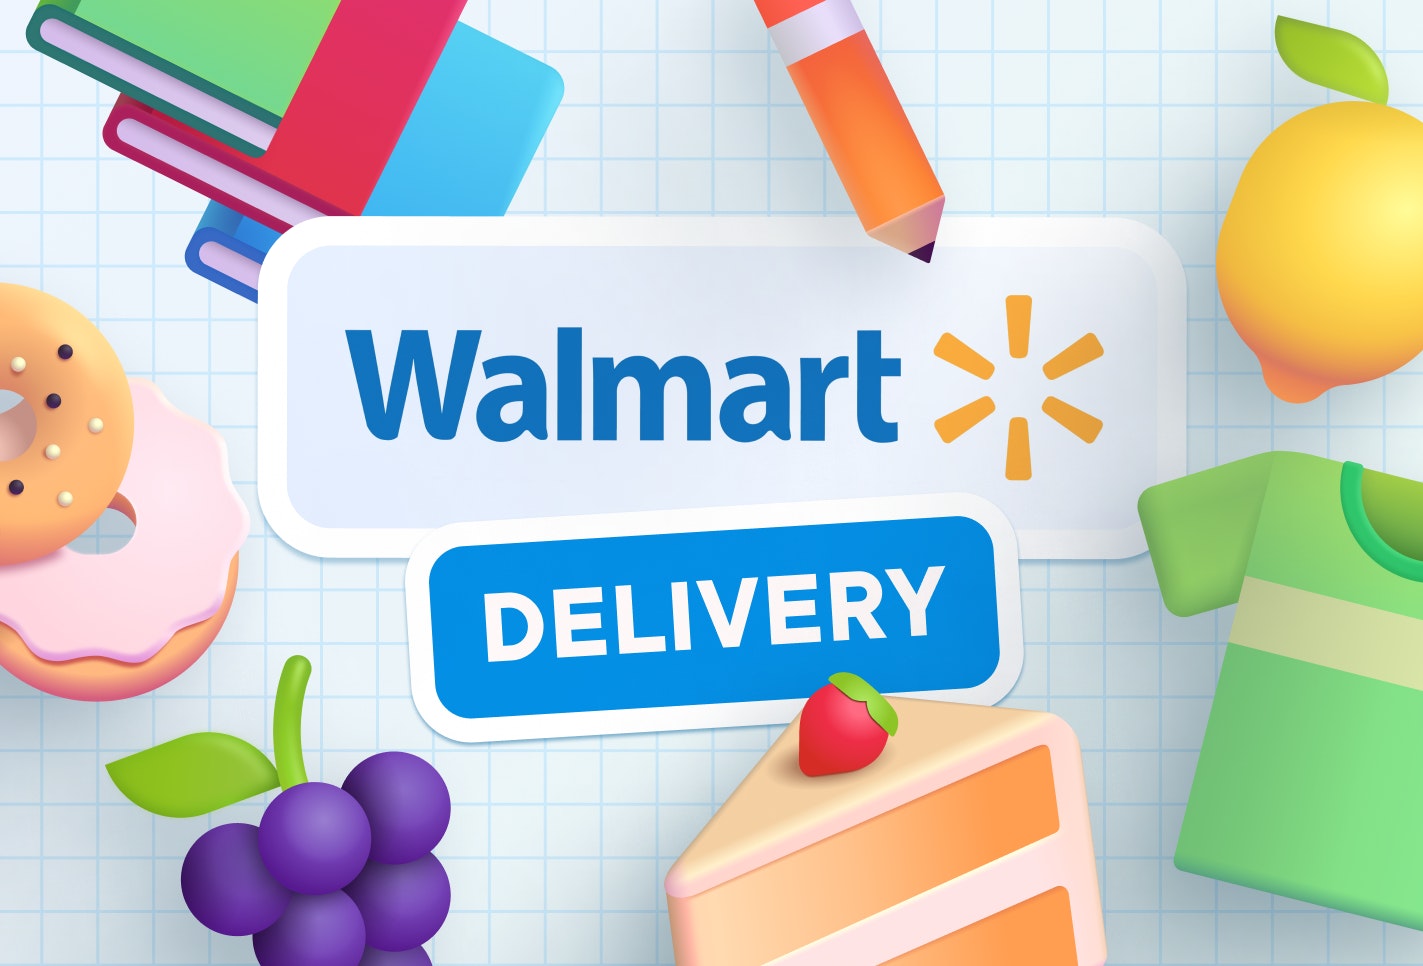 How to get Walmart deliveries